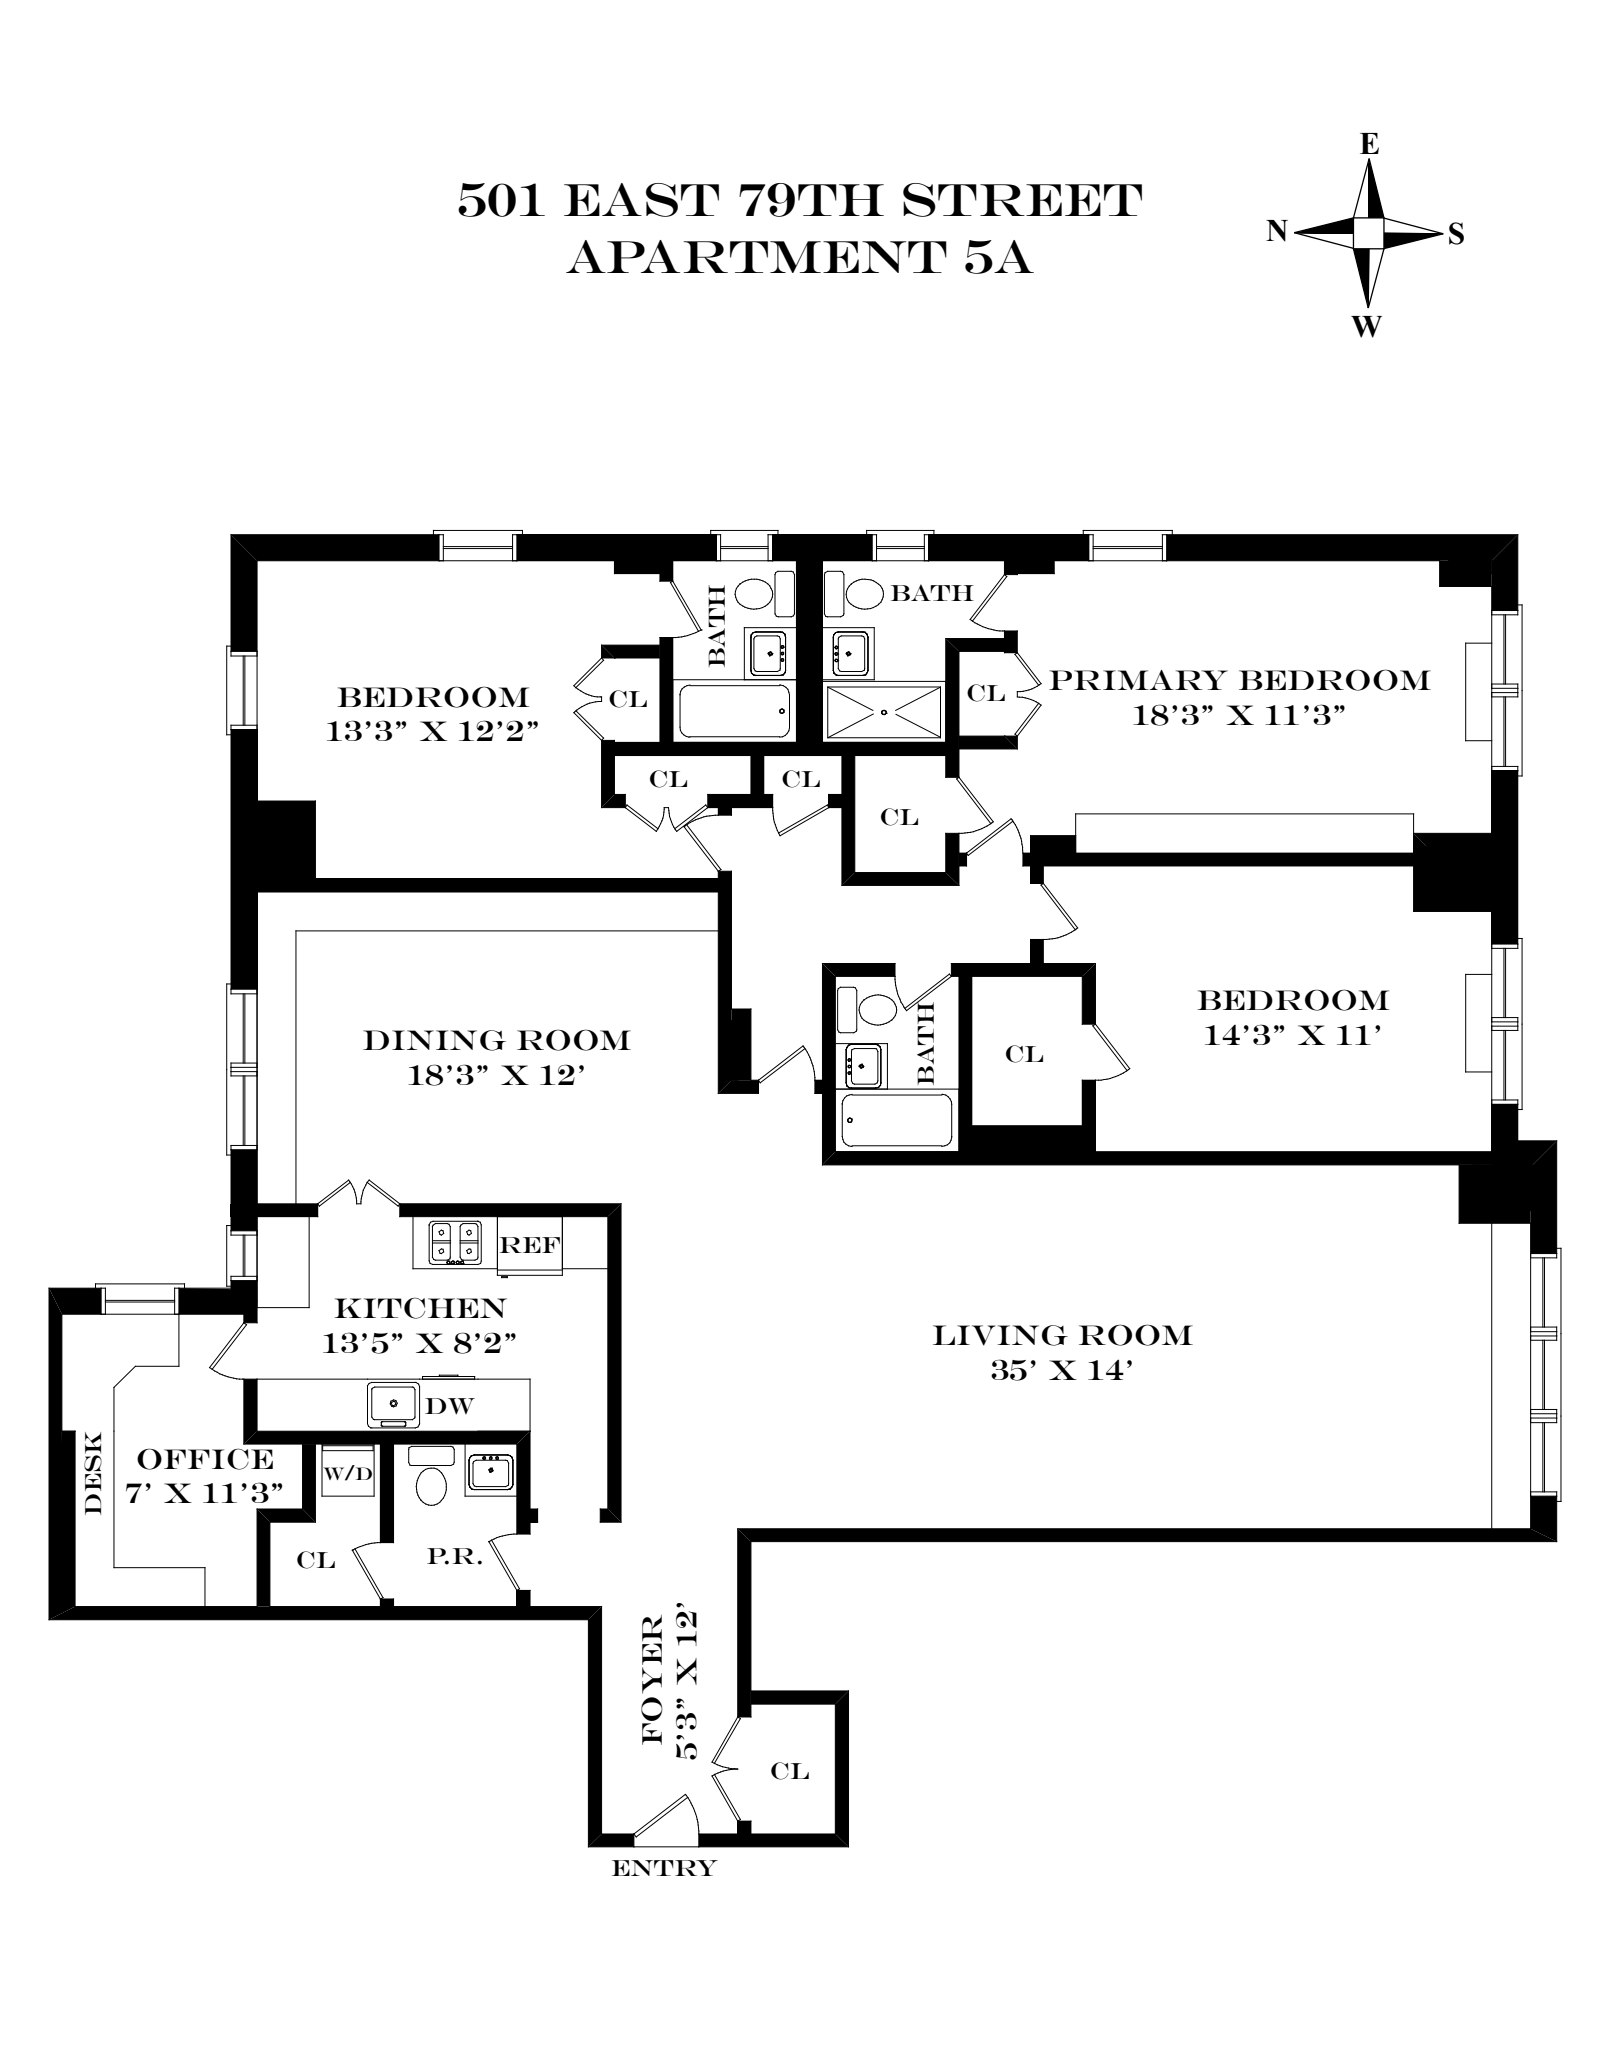 Floorplan for 501 East 79th Street, 5A